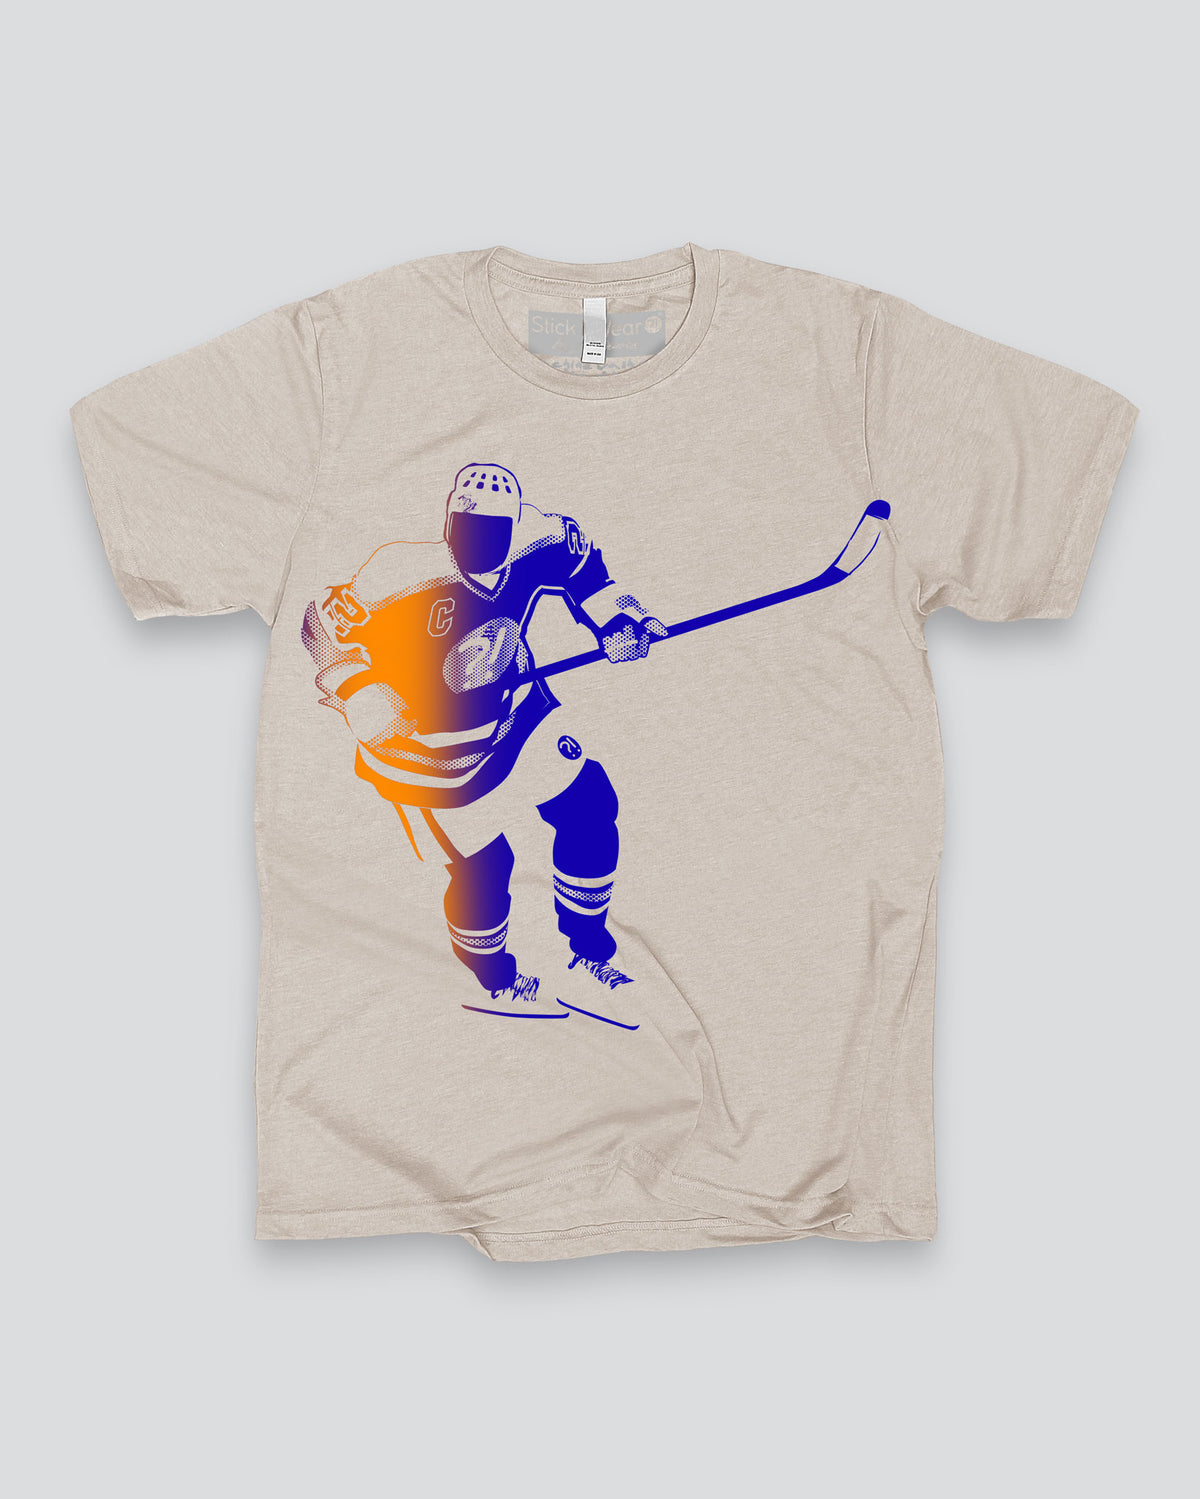 GREAT Hockey Stance T-Shirt